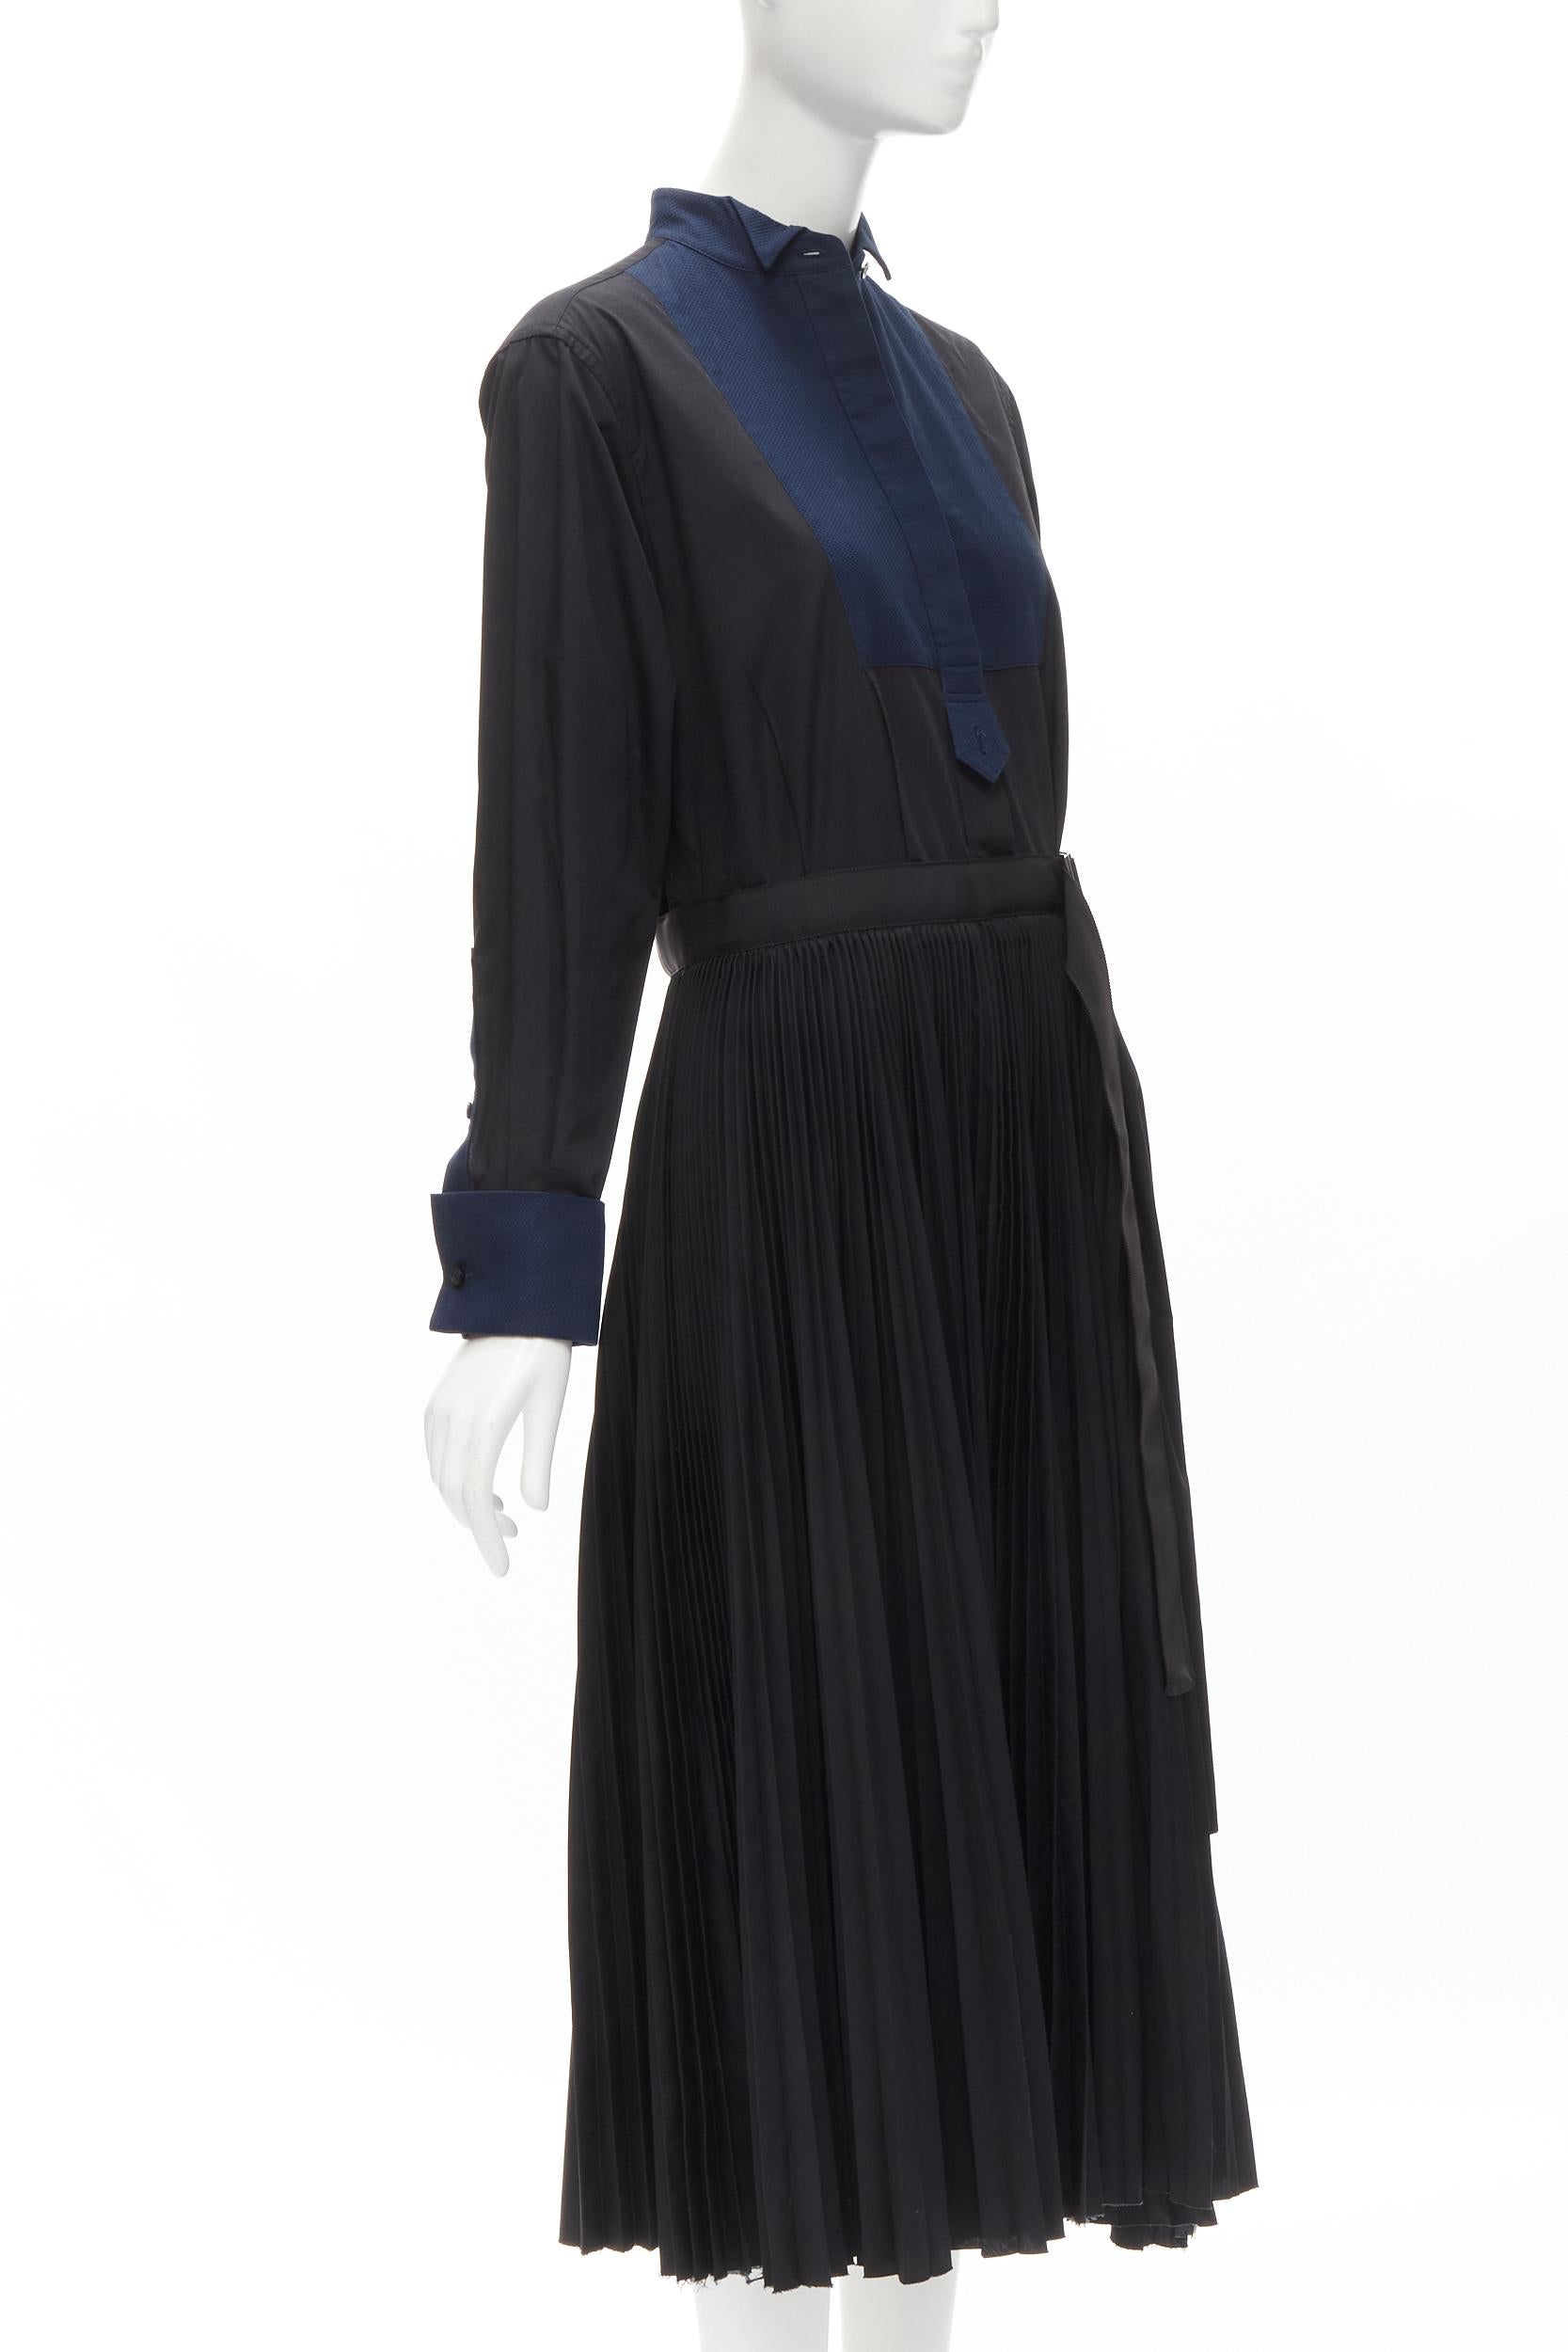 Black SACAI navy tuxedo bib collar black cotton pleated skirt belted midi dress JP2 M For Sale